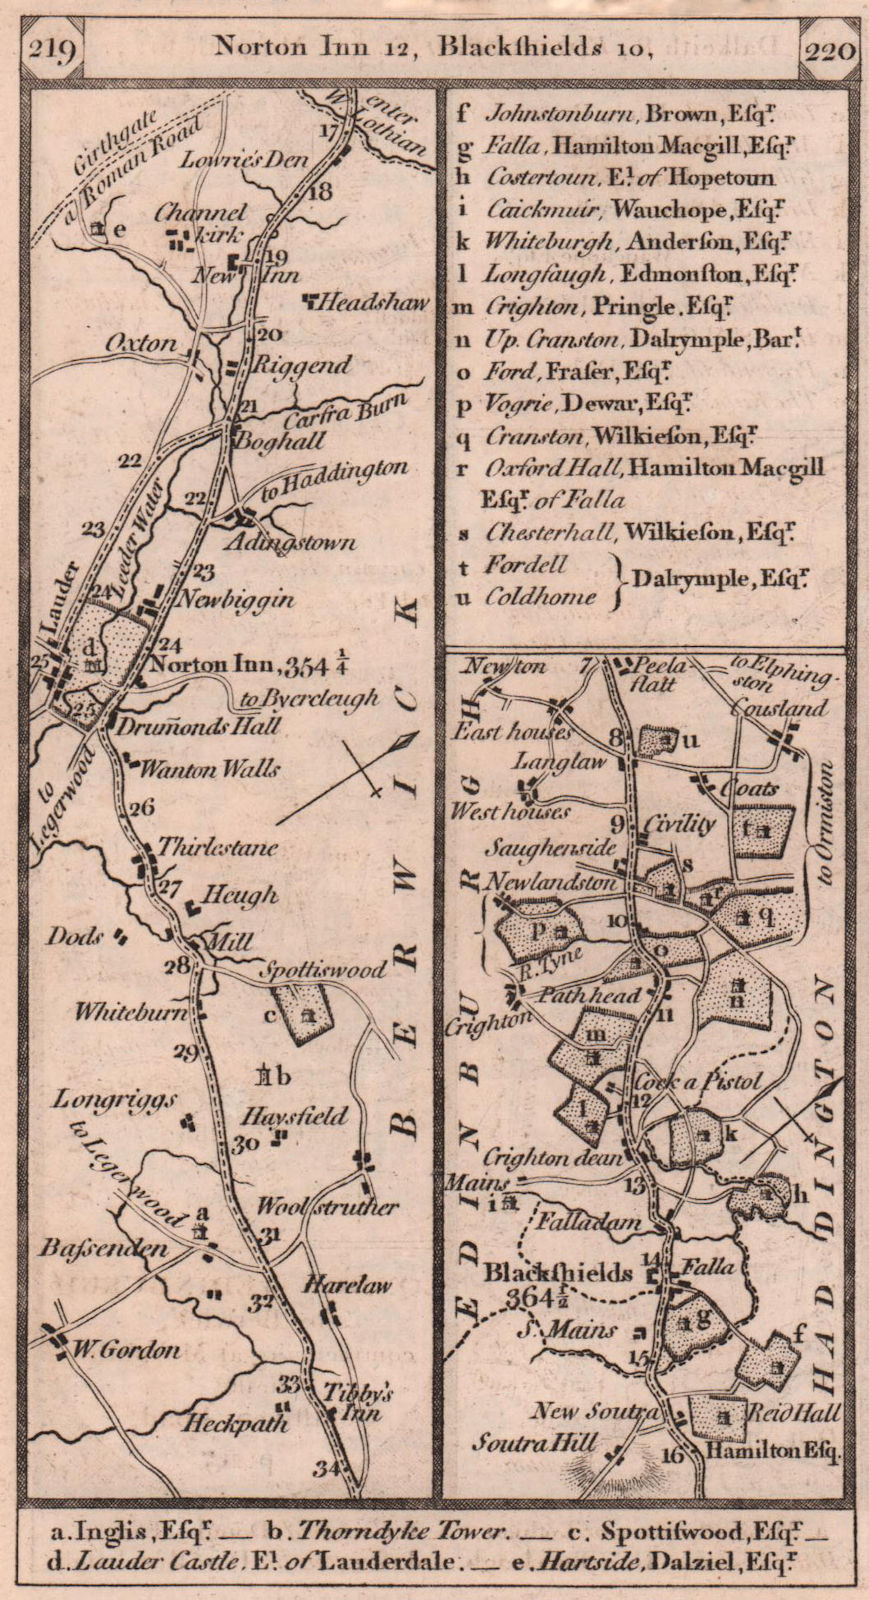 Associate Product Lauder - Norton Inn - Blackshields road strip map PATERSON 1803 old